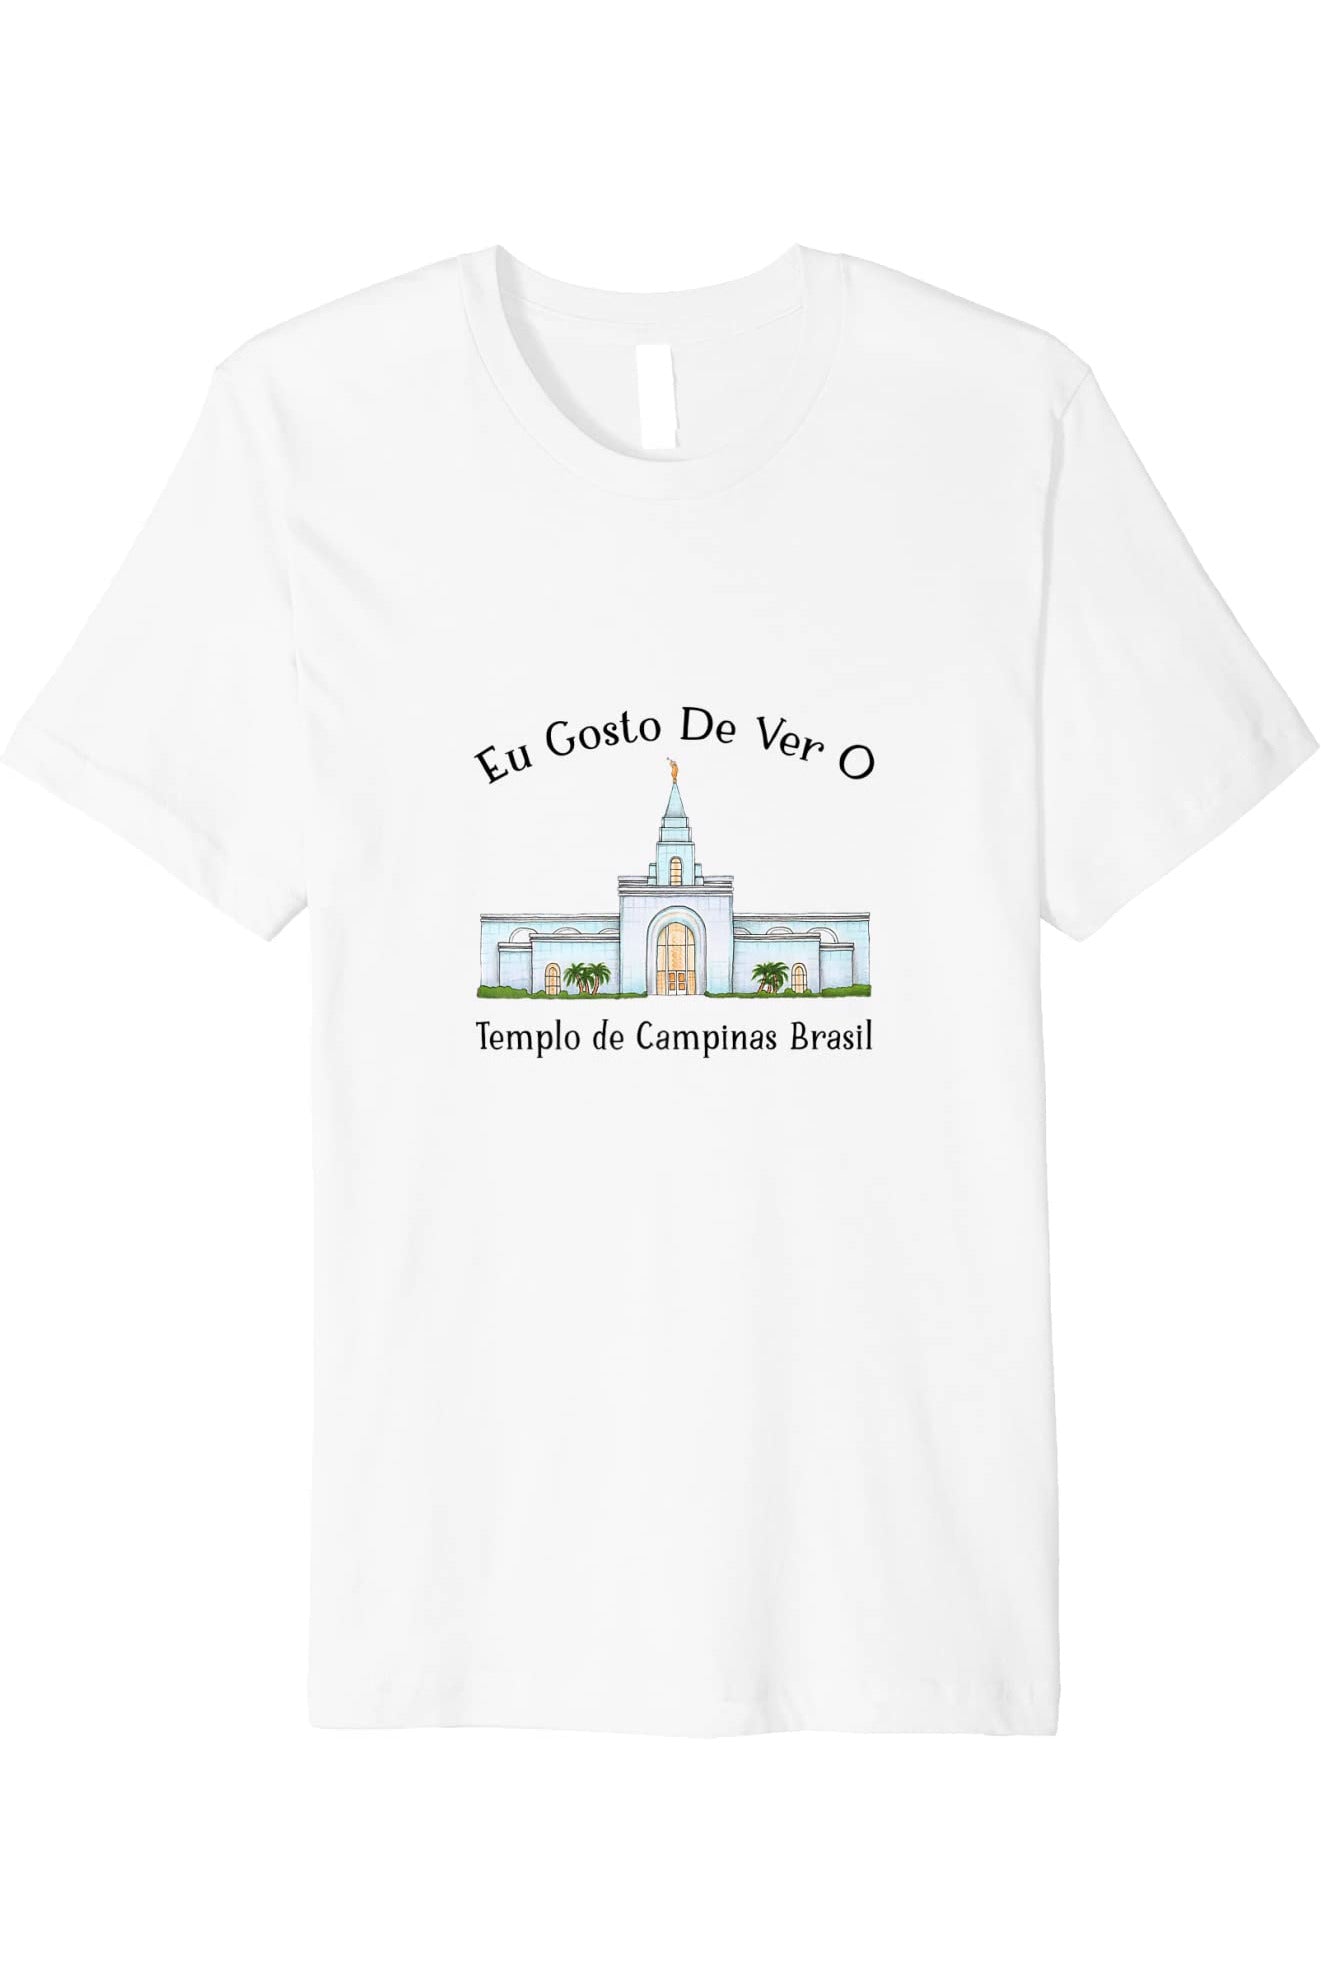 Templo de Manaus Brasil T-Shirt - Premium - Happy Style (Portuguese) US